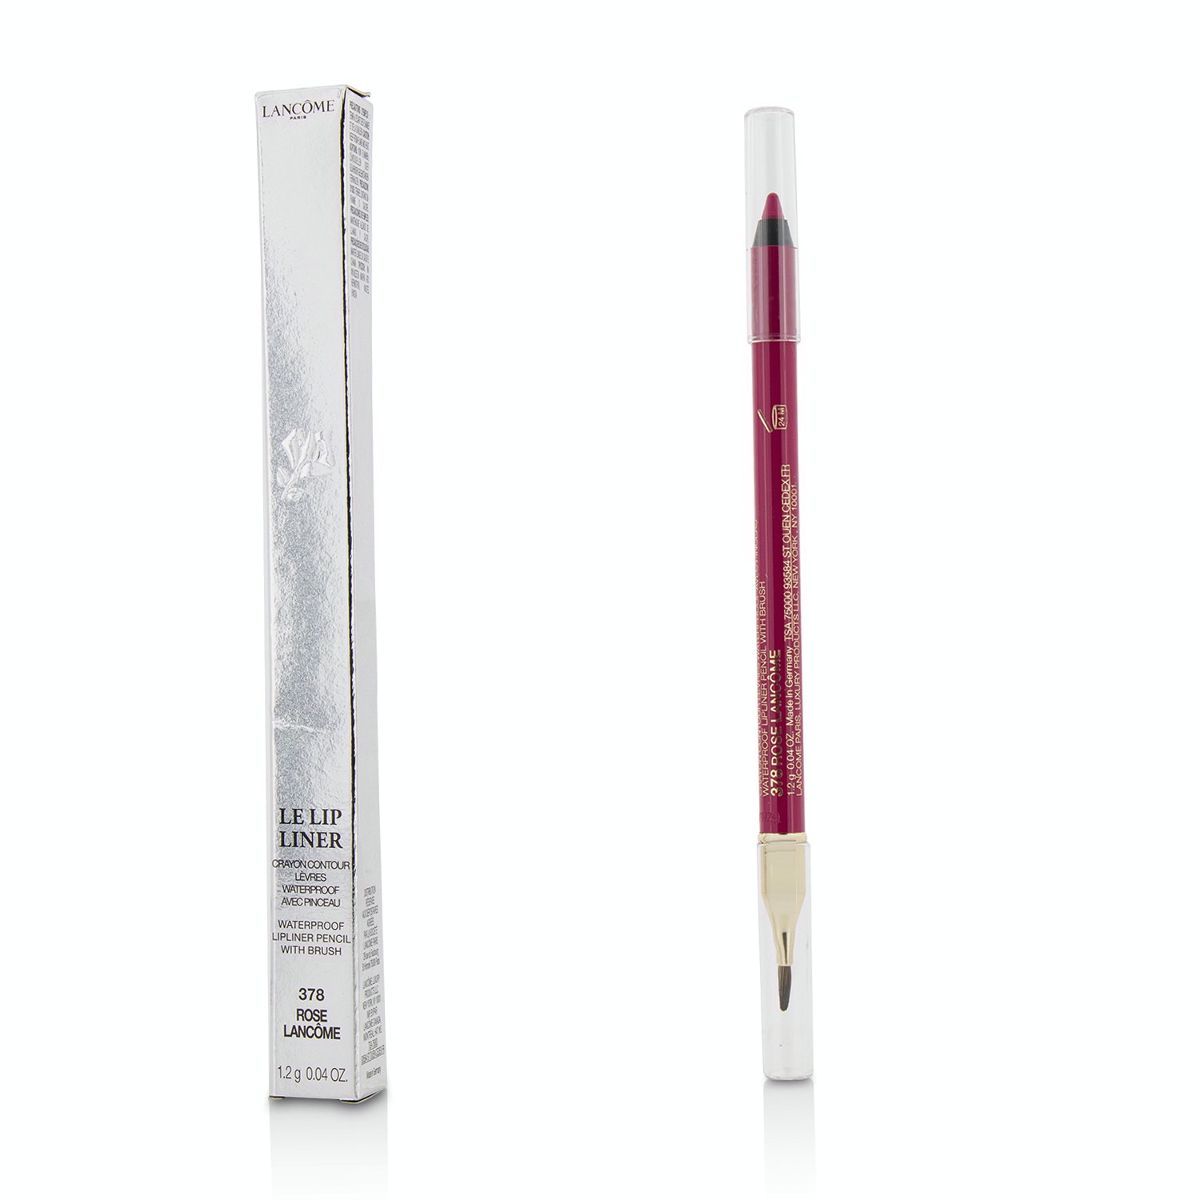 Le Lip Liner Waterproof Lip Pencil With Brush - #378 Rose Lanc?me Lancome Image